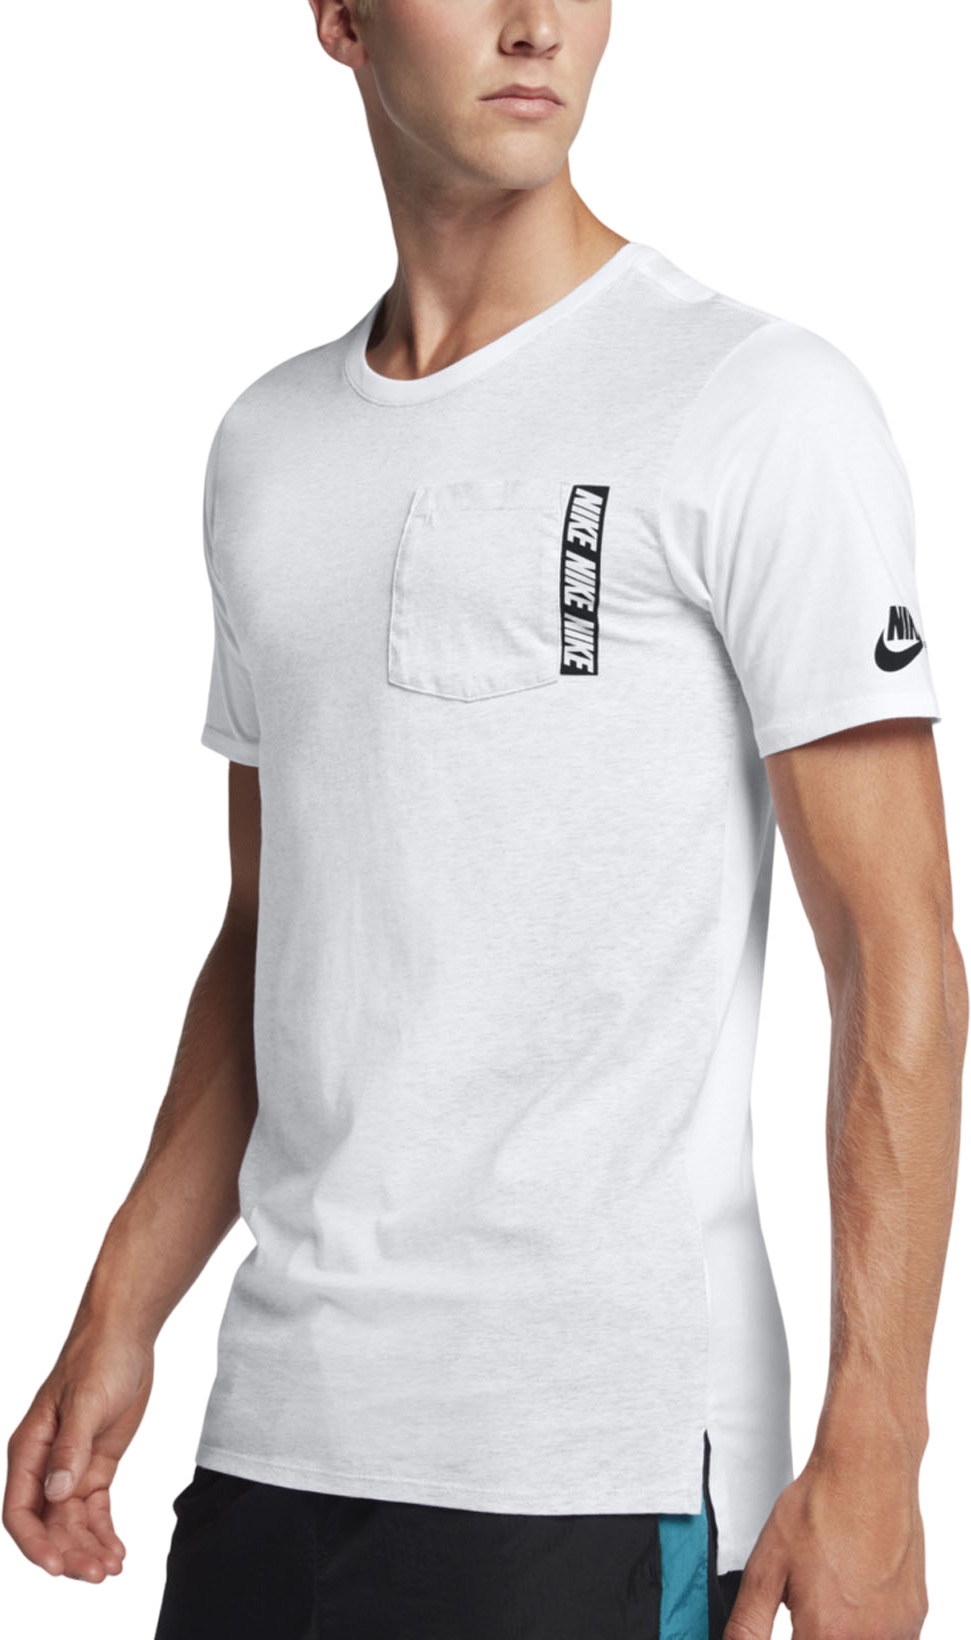 Мужская футболка Nike Sportswear Drptl Av15 Prnt 856469-101